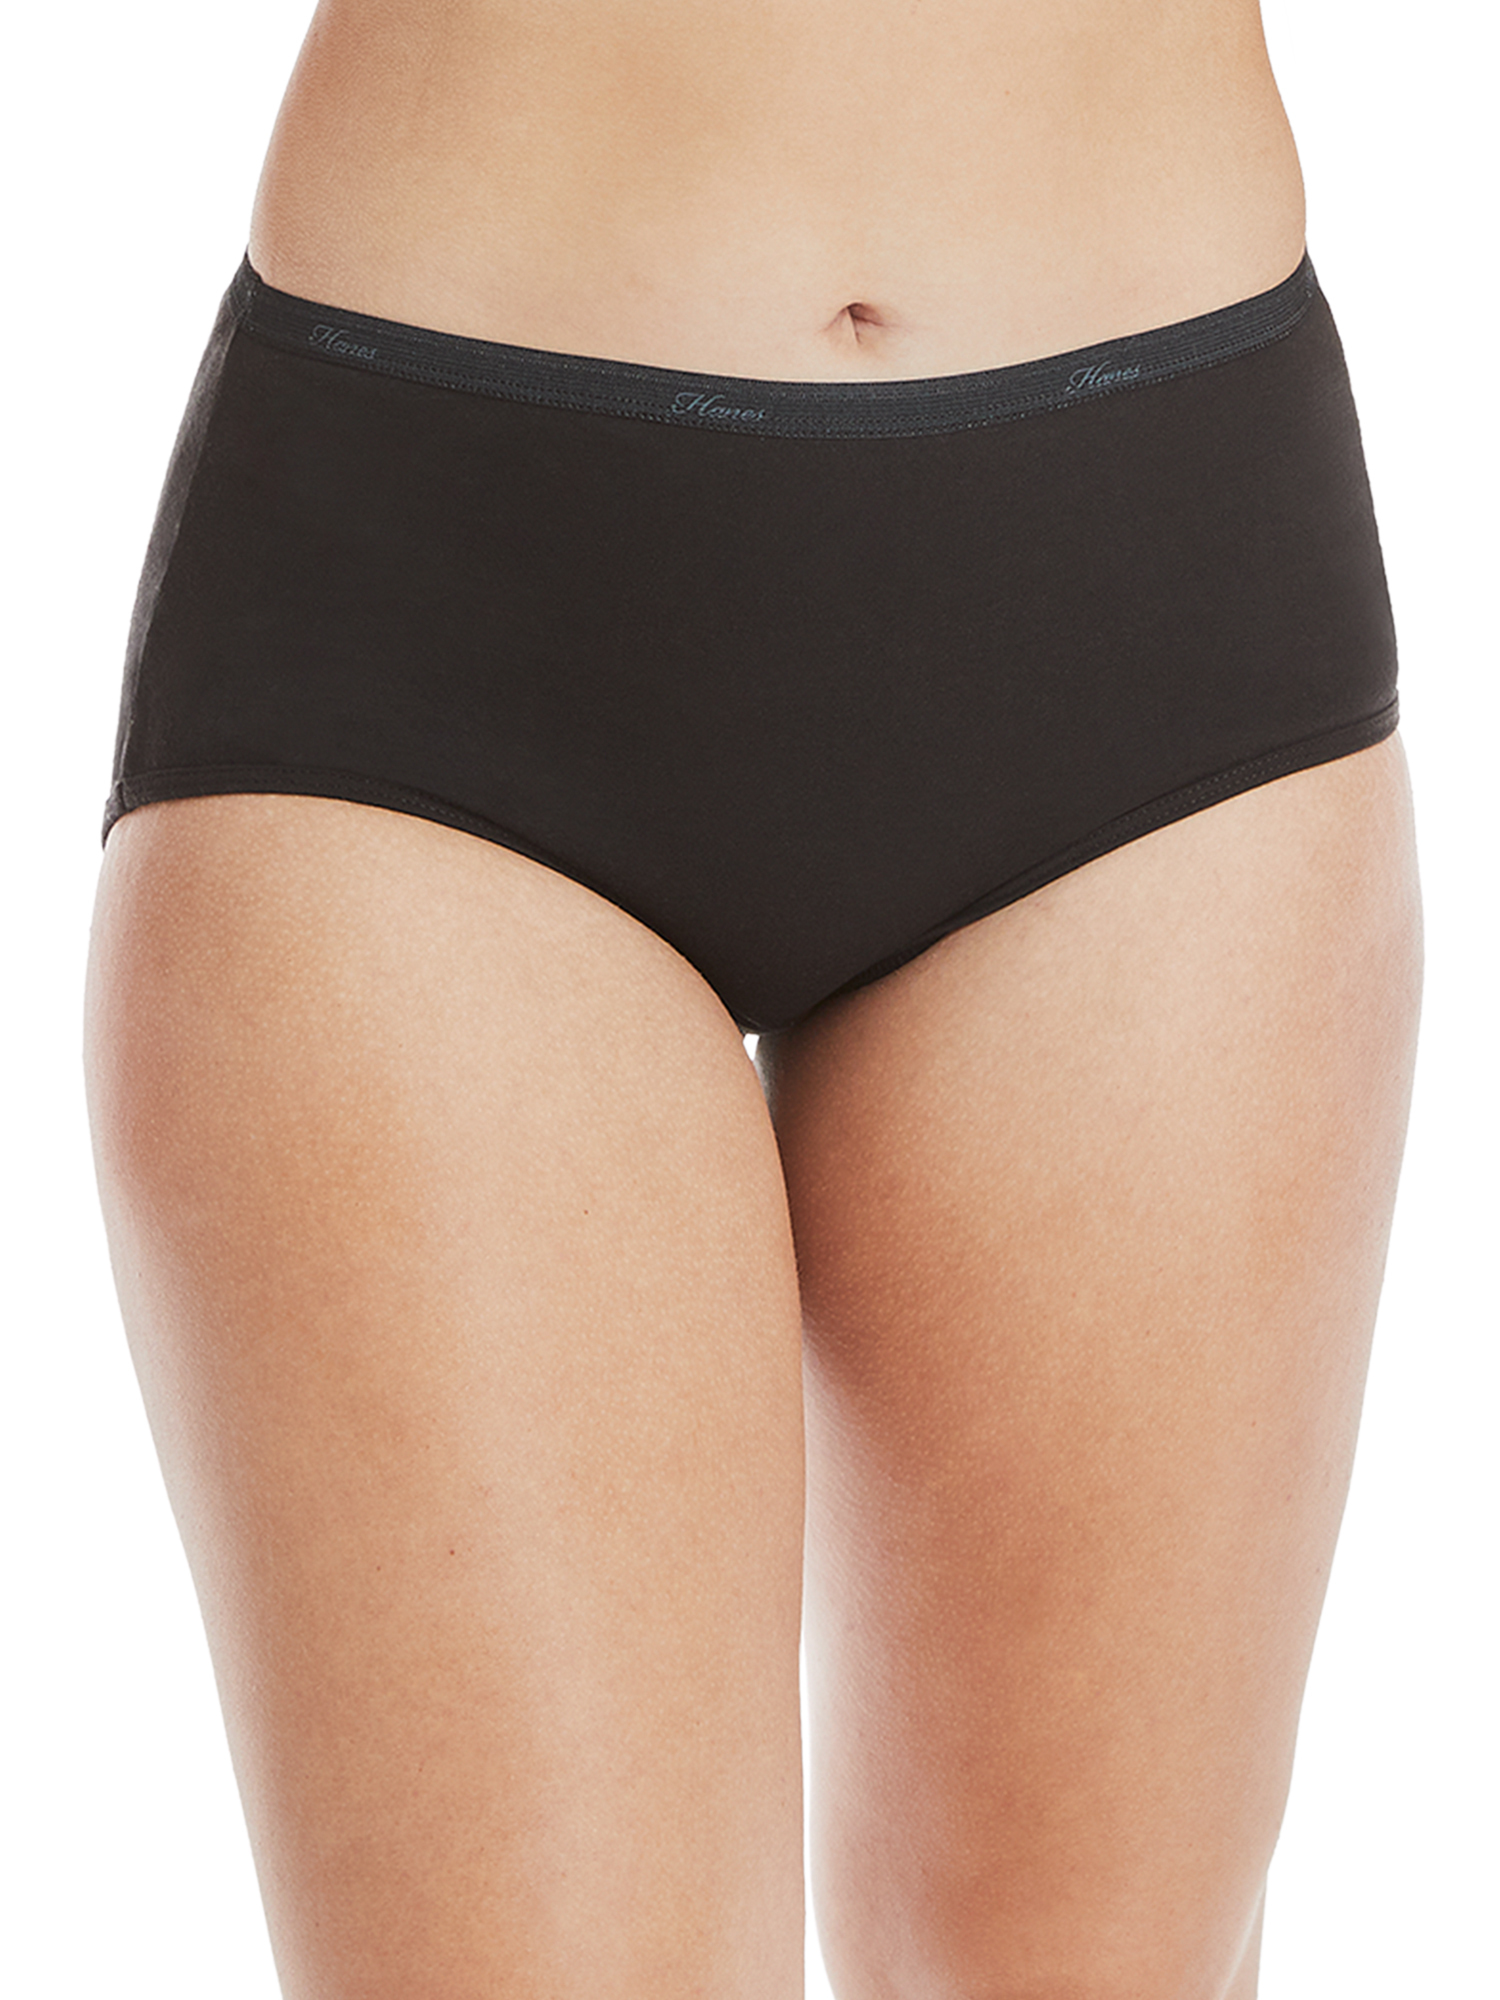 Hanes Women's Cool Comfort Cotton Brief Underwear, 6-Pack - image 3 of 7